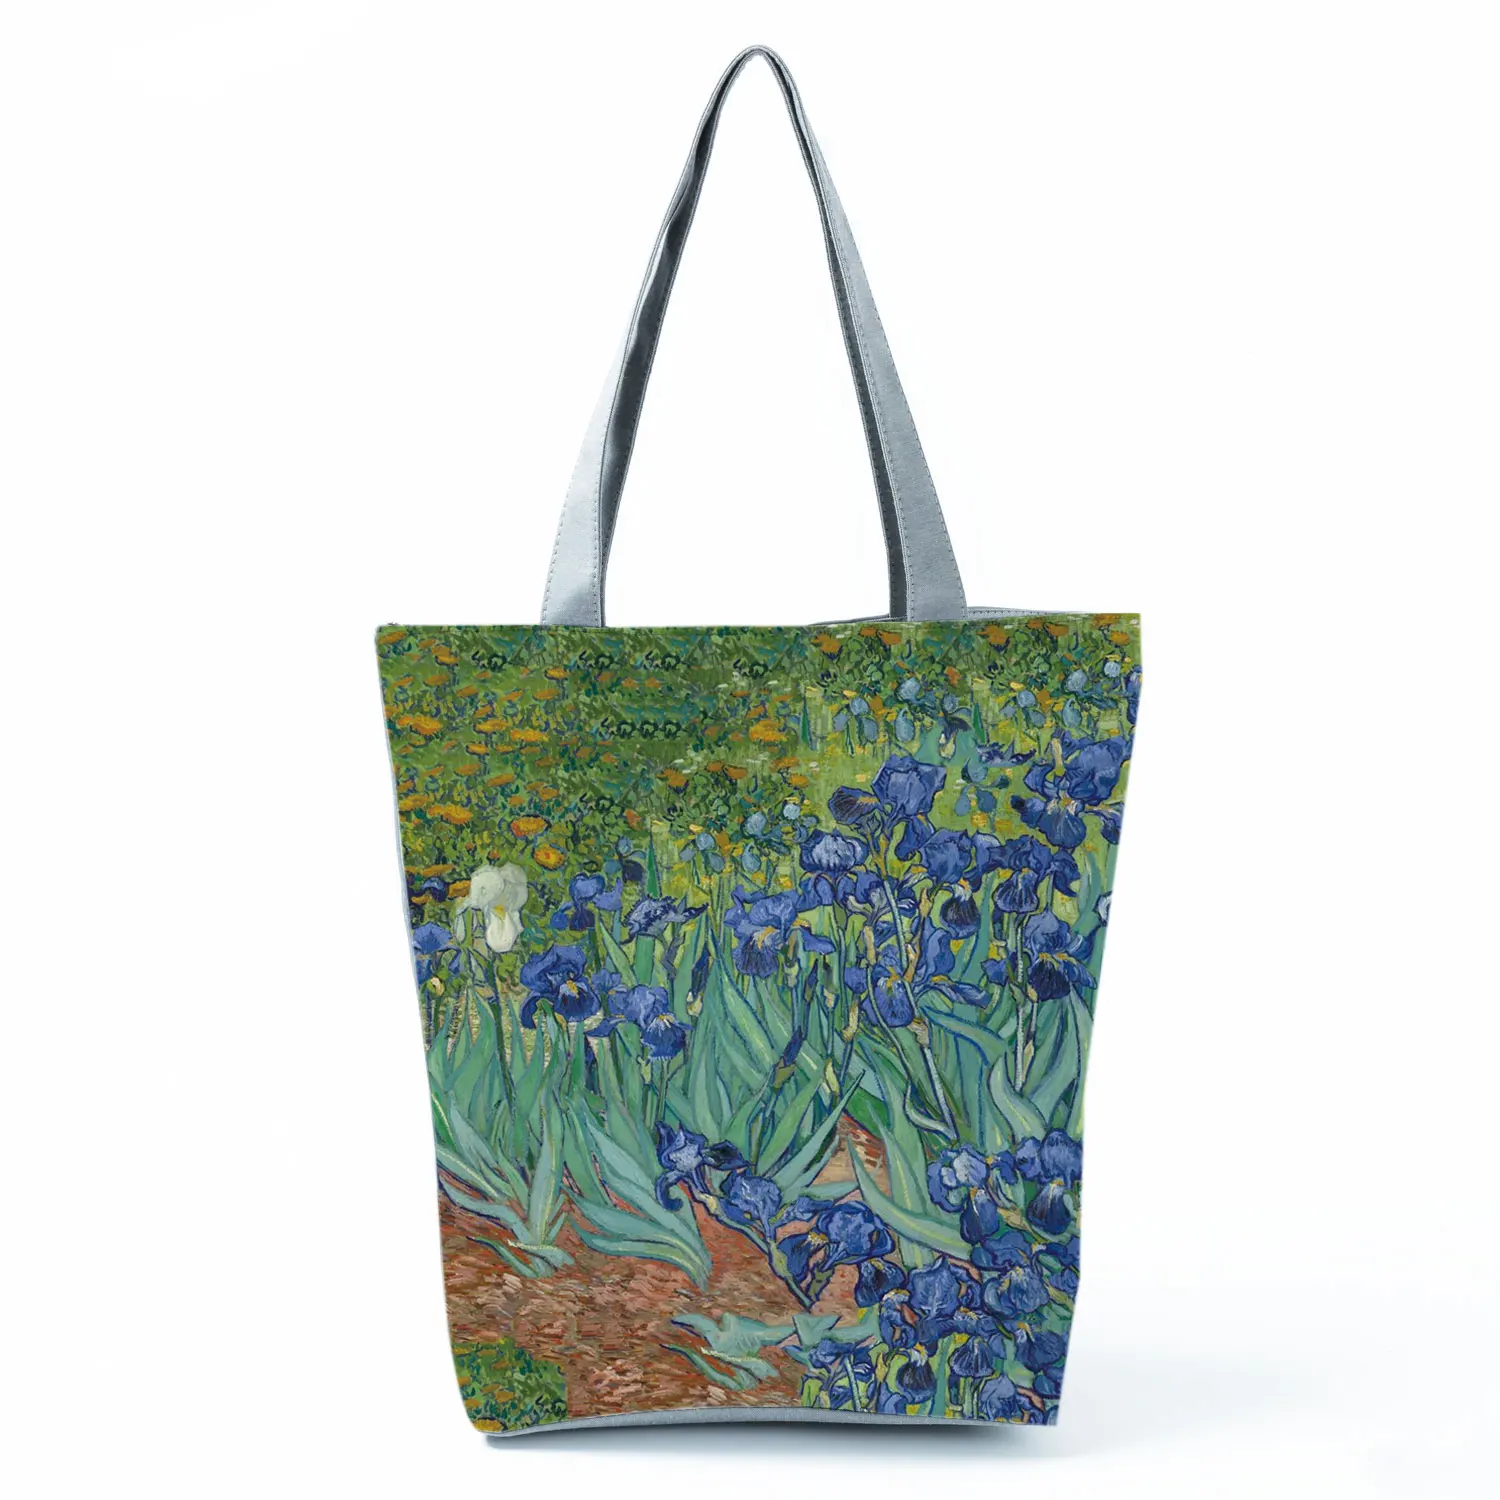 New Van Gogh Oil Painting Tote Bag Retro Art Fashion Travel Bag Women Casual Eco Reusable Shopping High Quality Foldable Handbag wristlets for women Totes